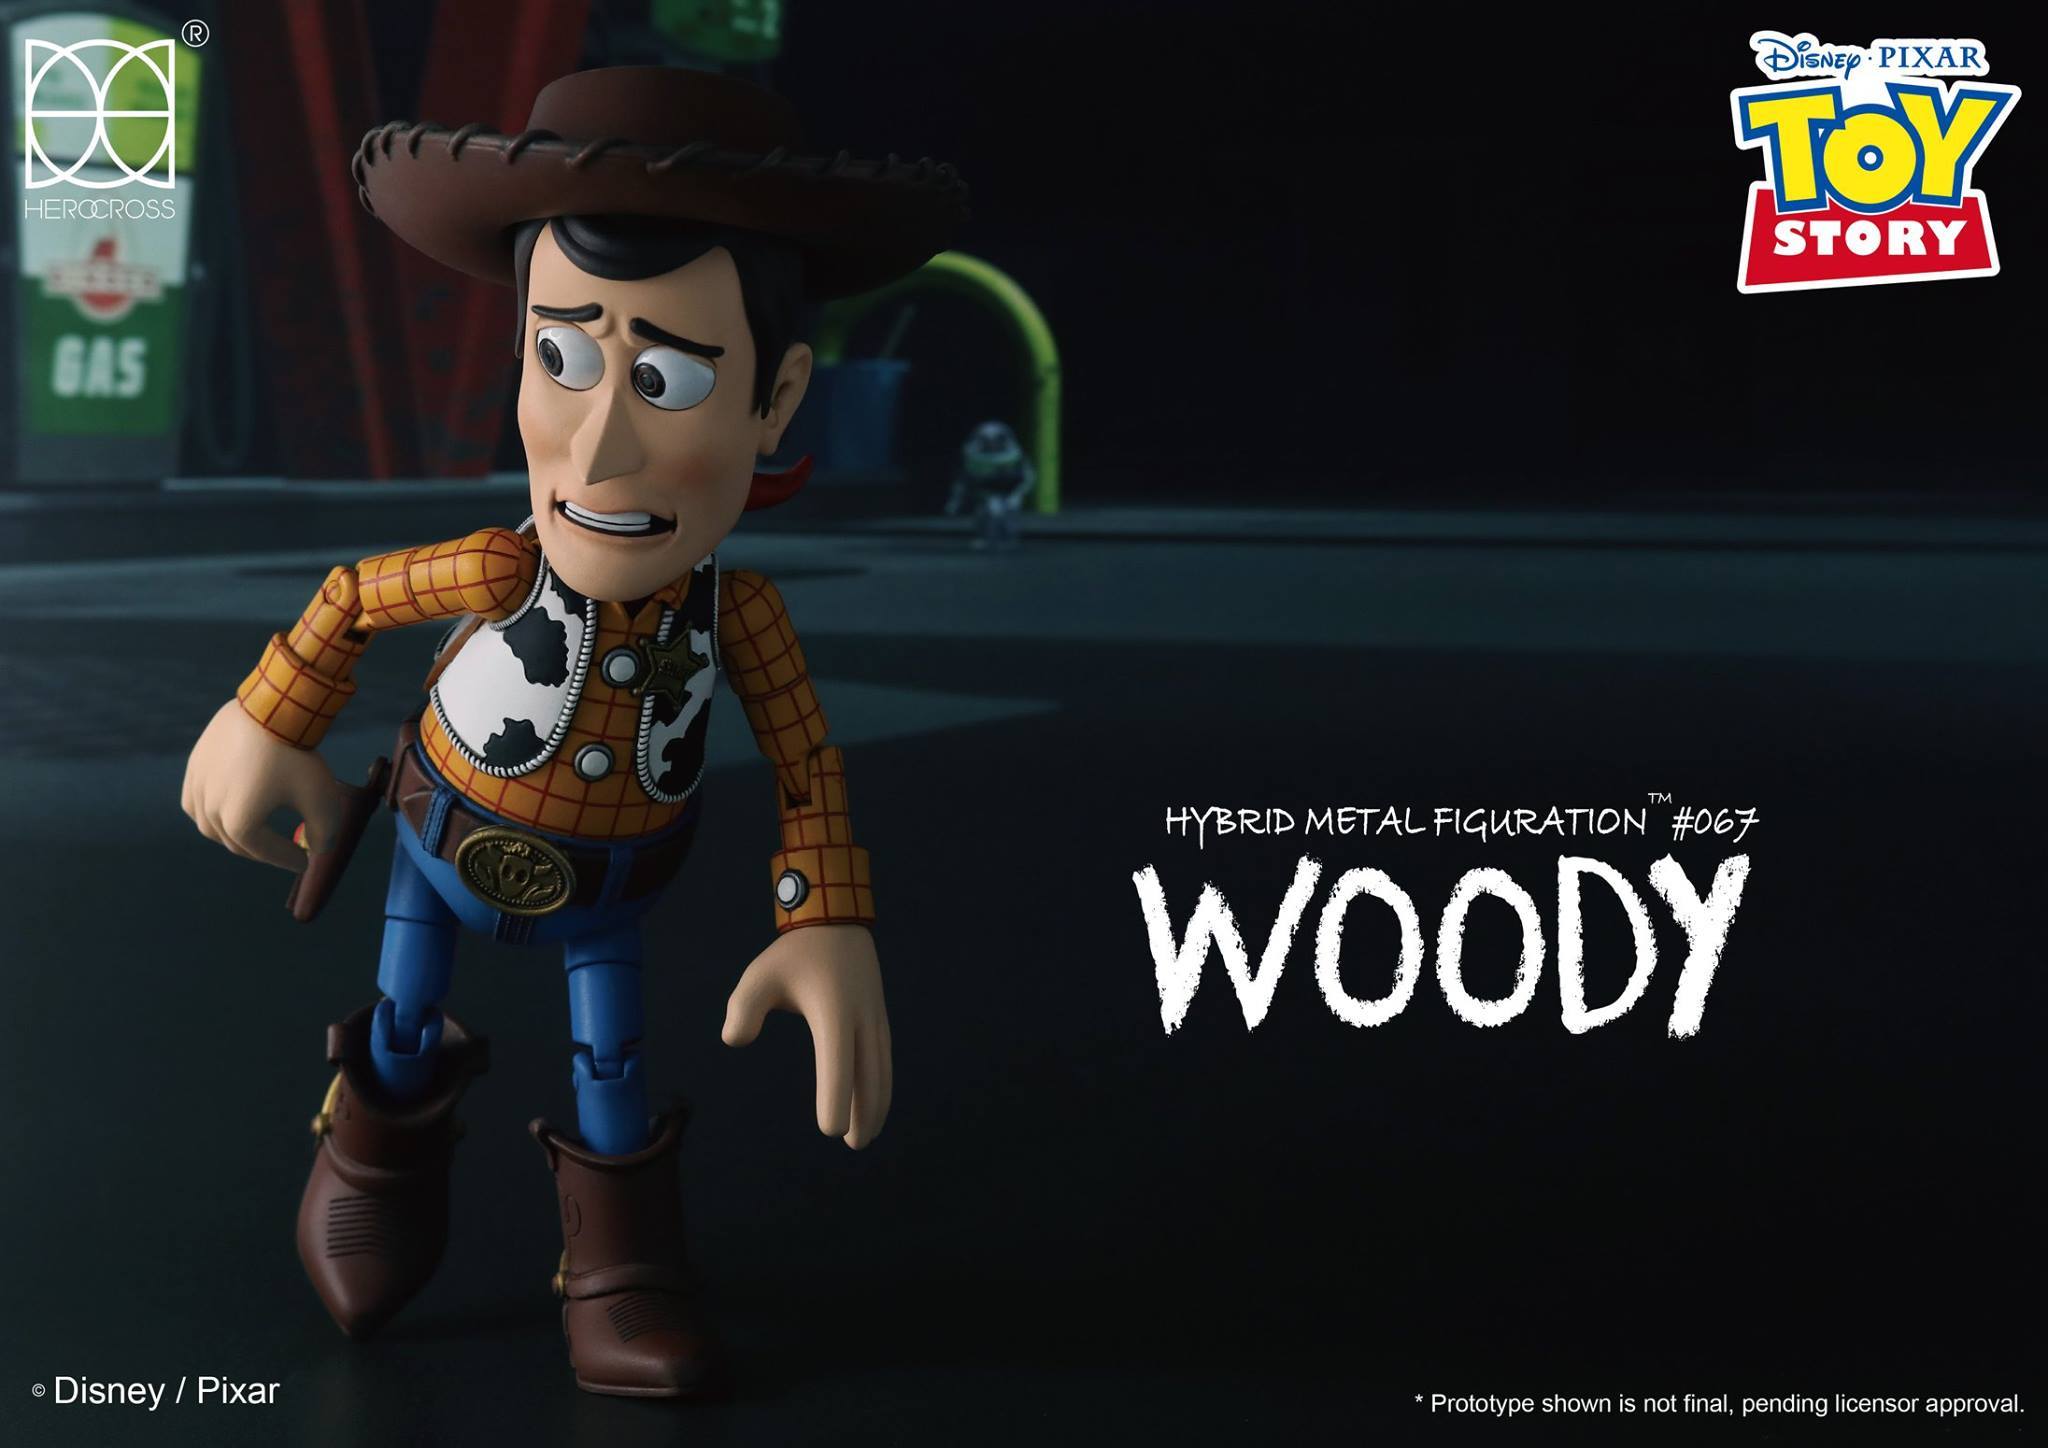 Herocross - Hybrid Metal Figuration - HMF067 - Toy Story - Woody